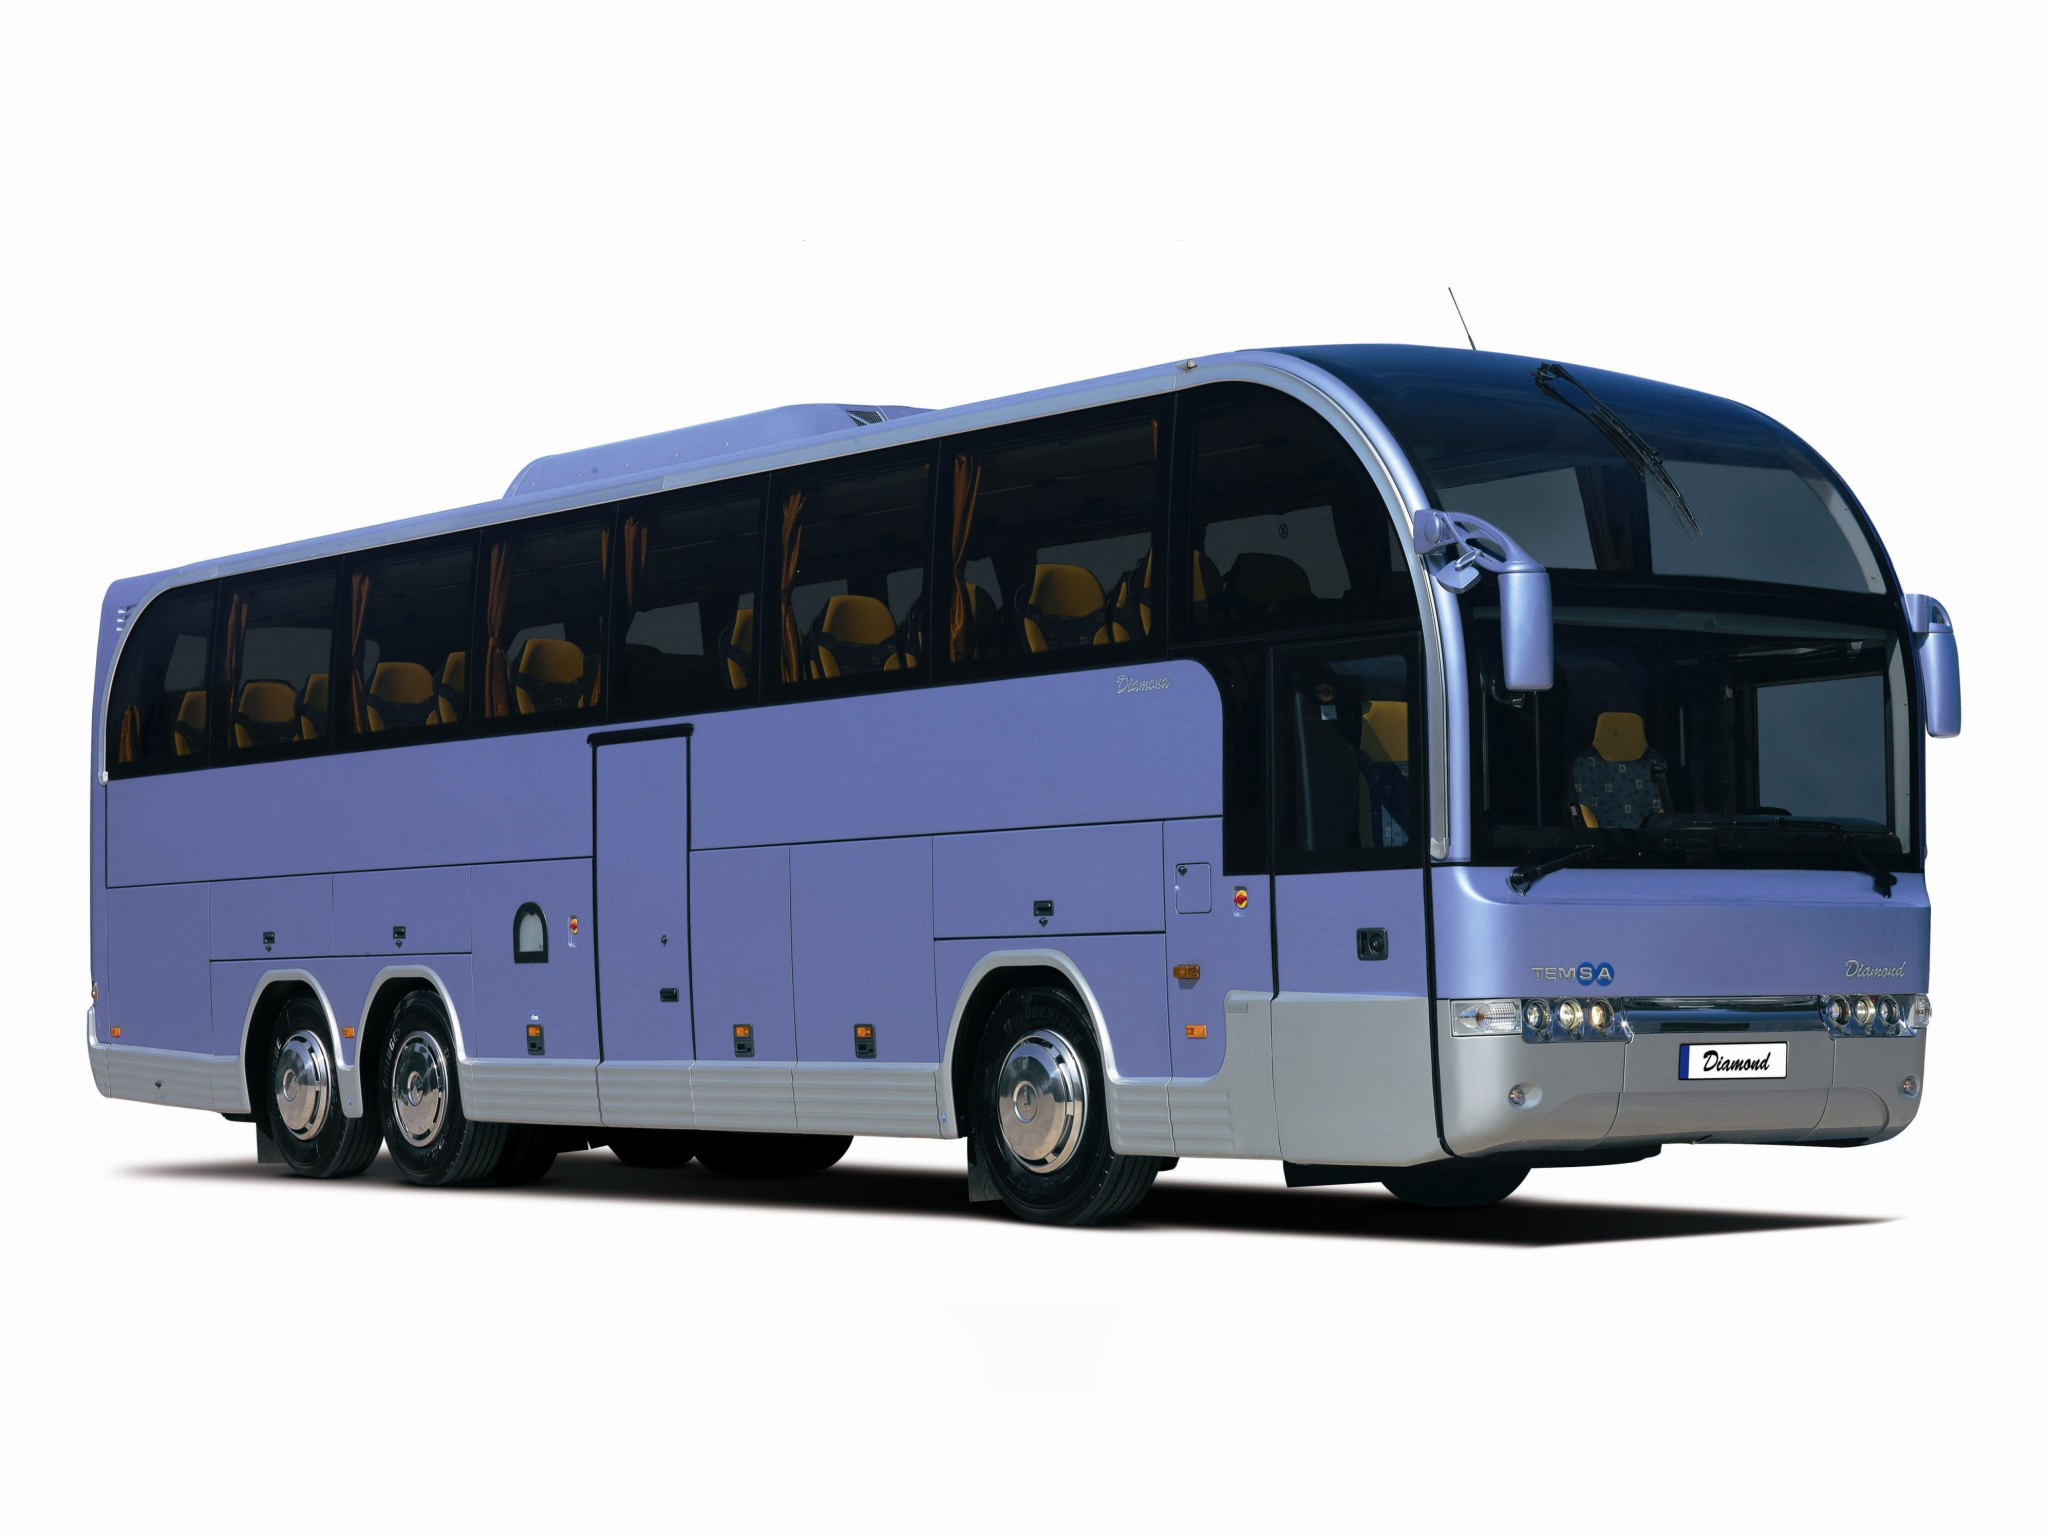 Автобус с908. Автобусы Temsa Diamond. Temsa Diamond 13. Туристический автобус. Автобус на белом фоне.